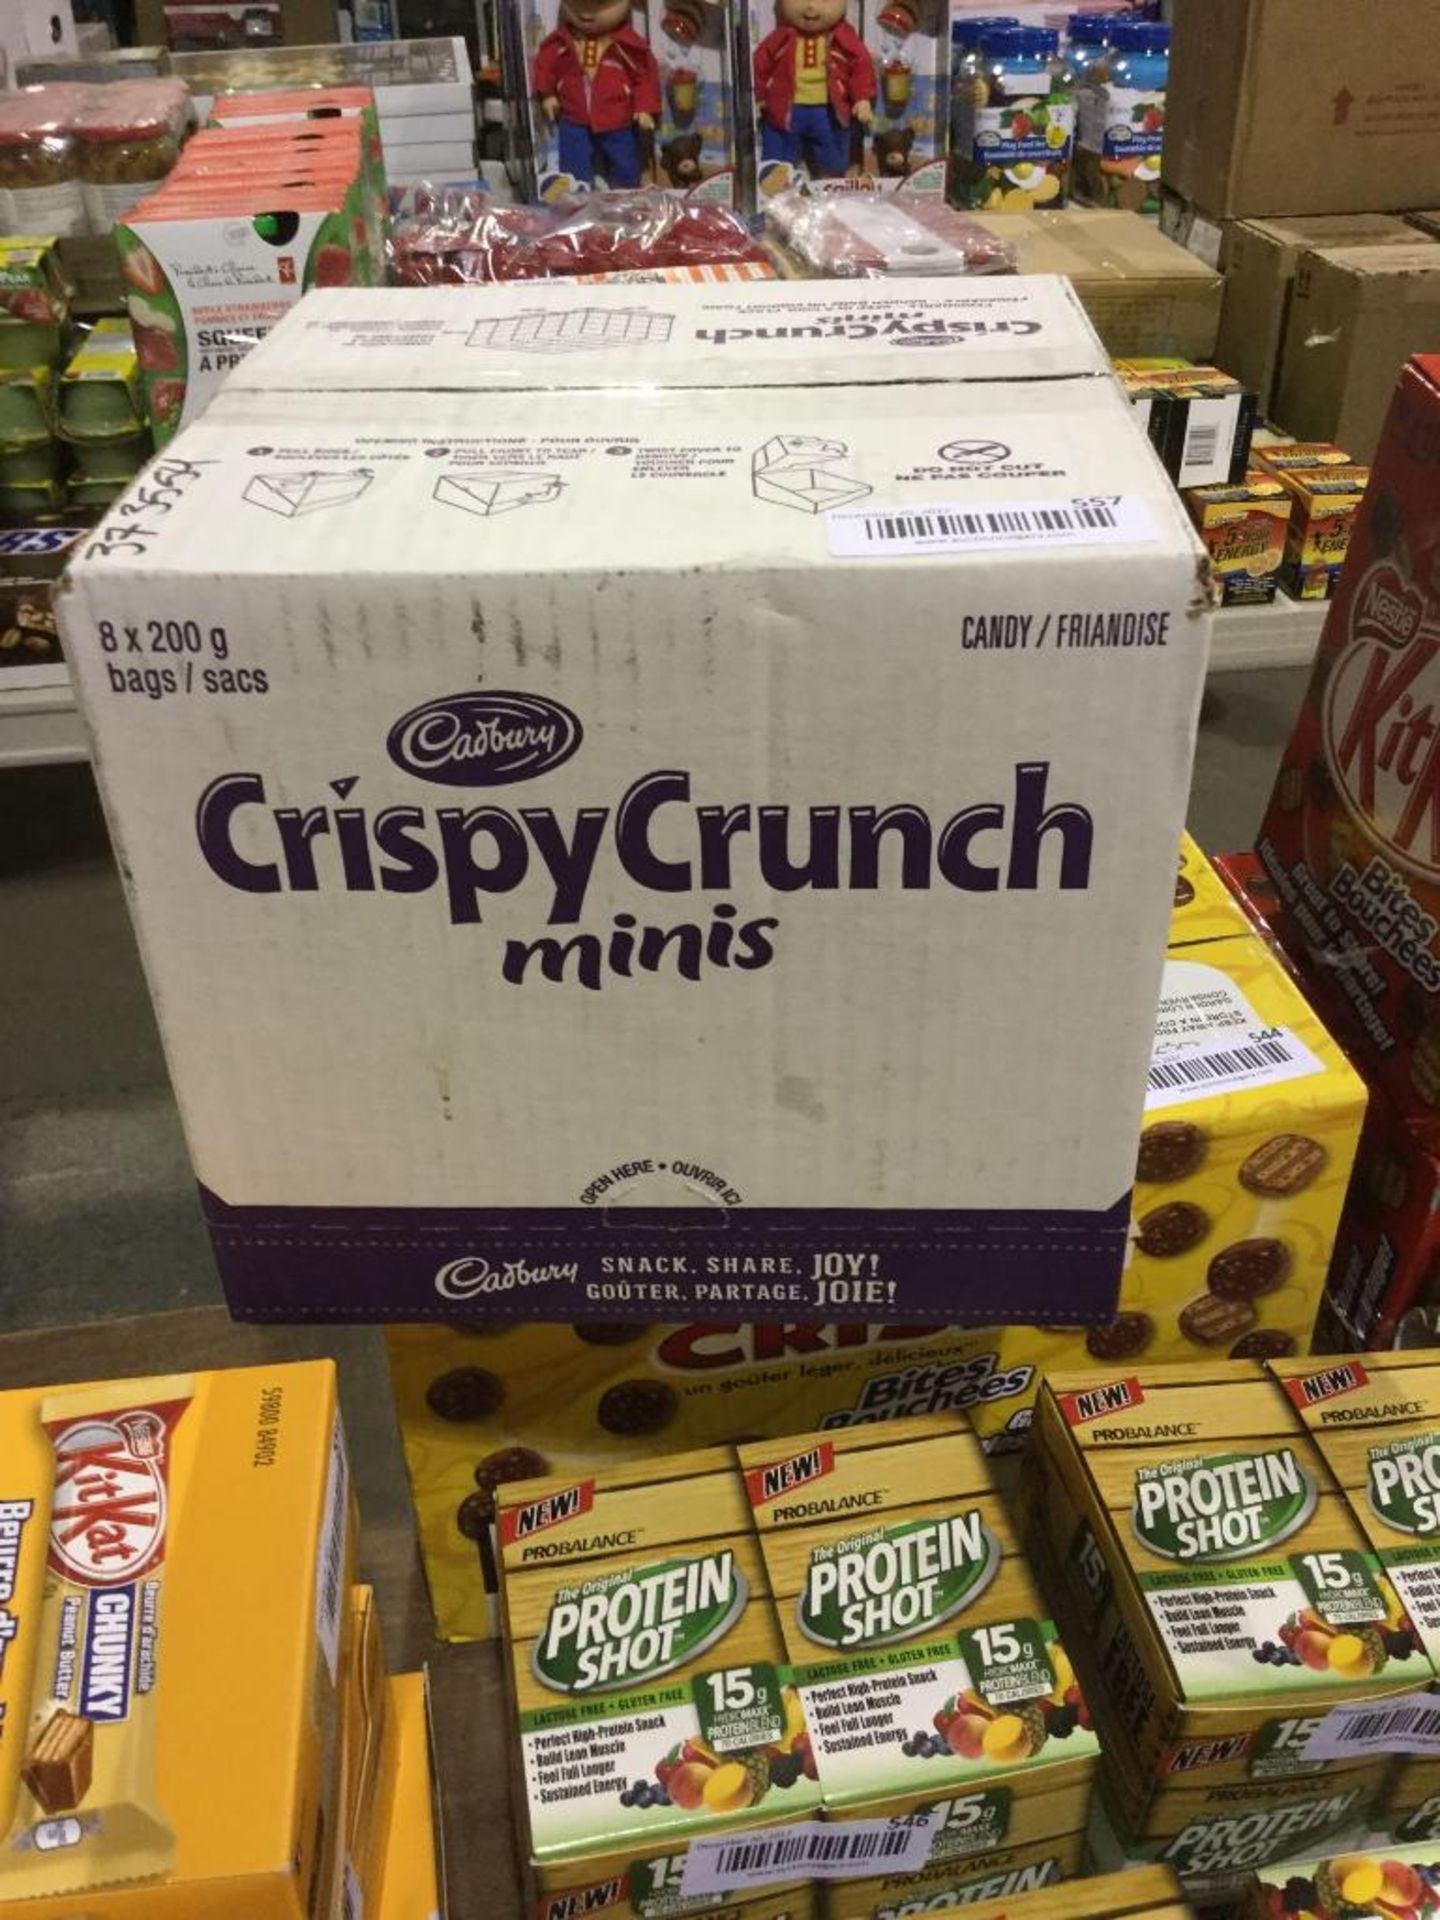 Case of 8 x 200 g Crispy Crunch mini's